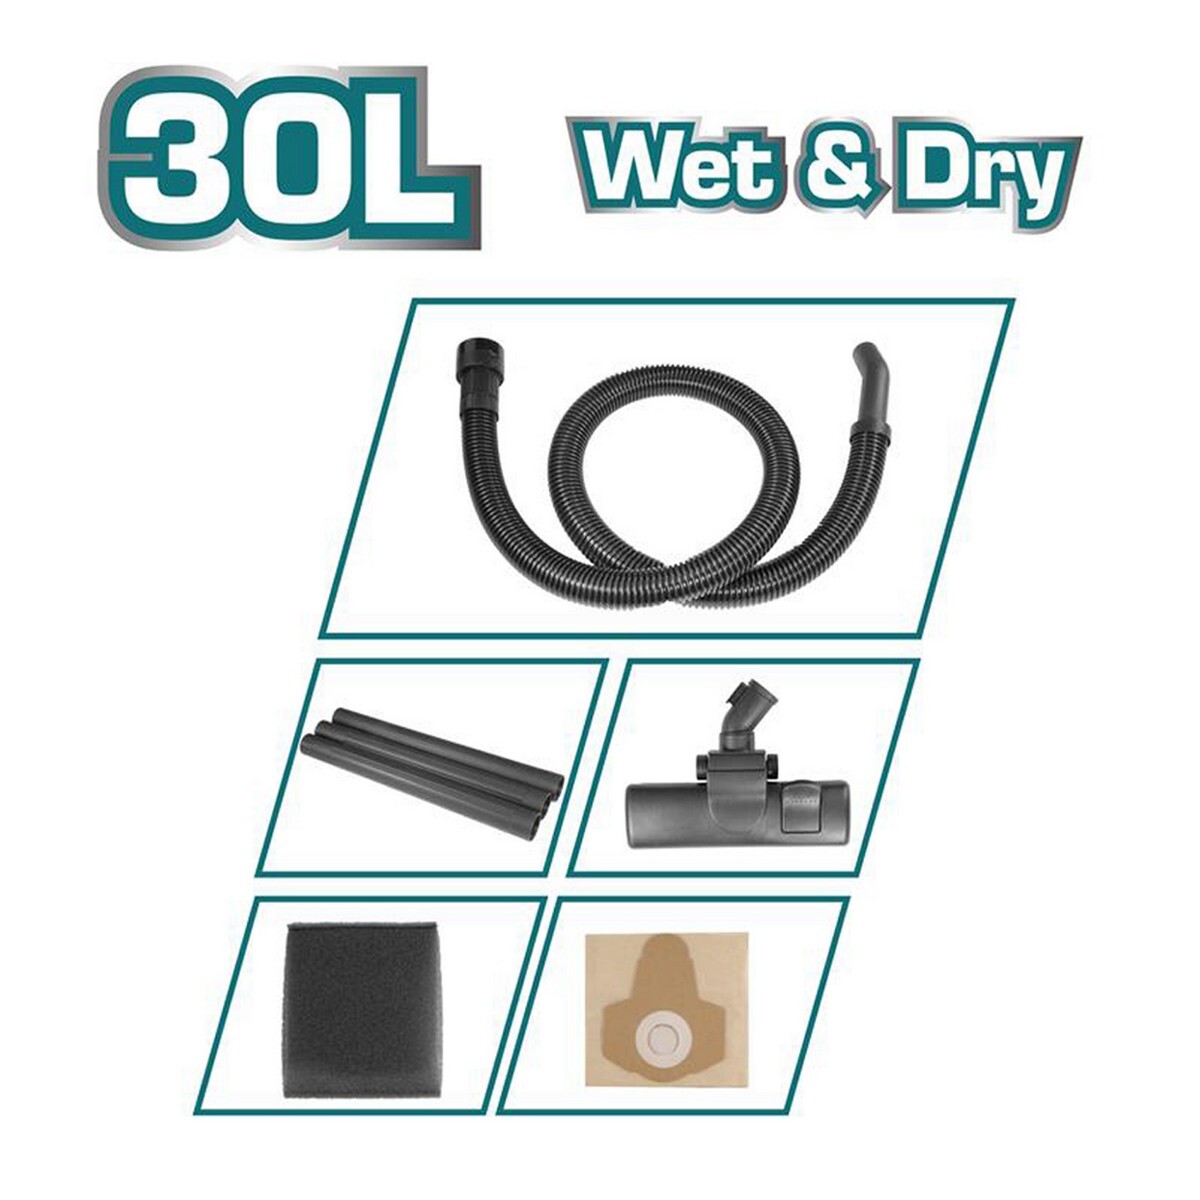 Total TVC13301 Wet & Dry Vacuum Cleaner 1300W